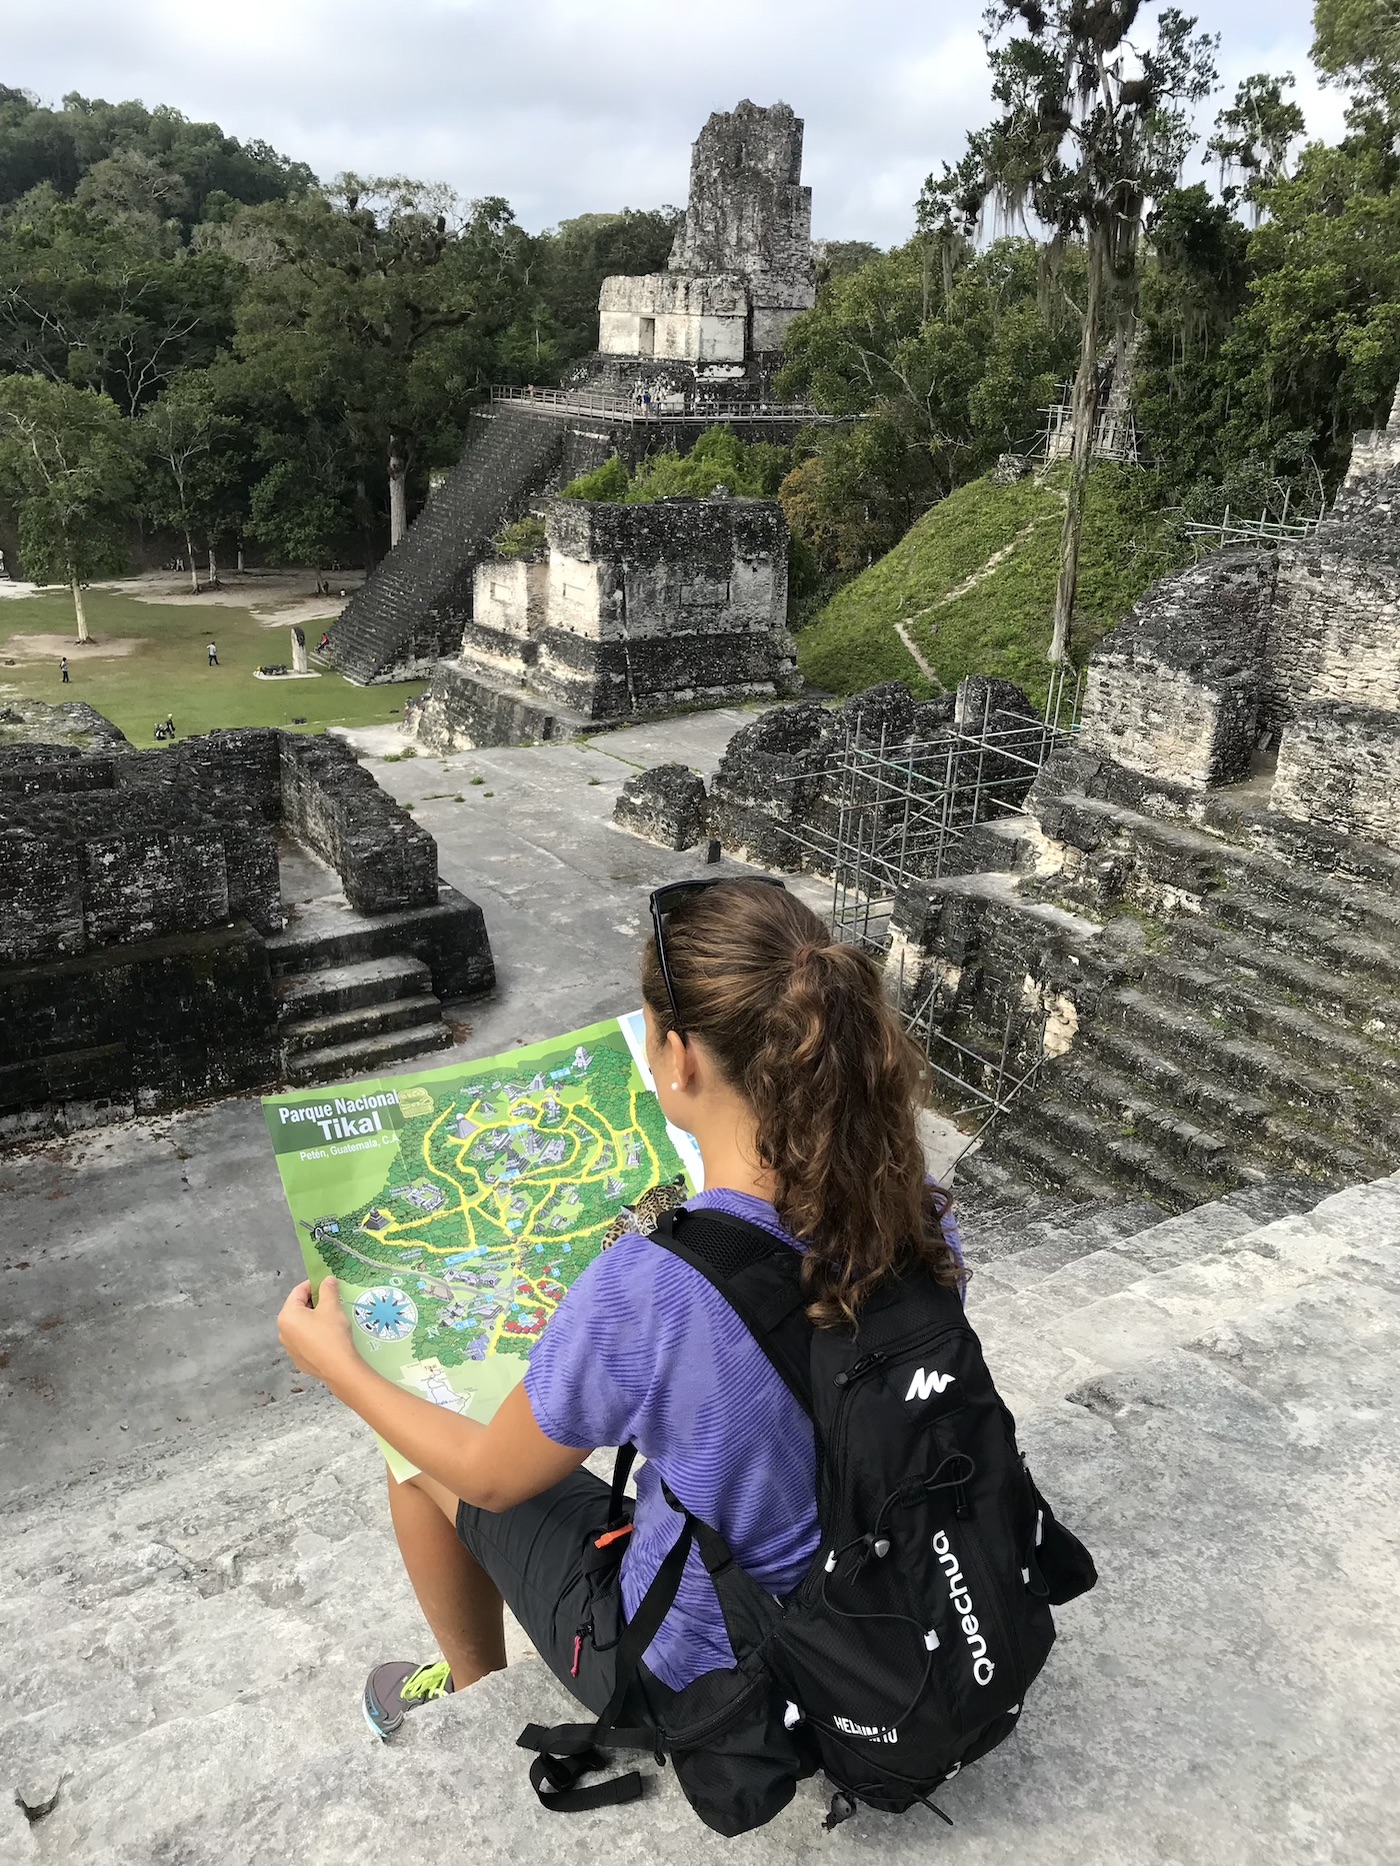 A huge Maya site, Tikal